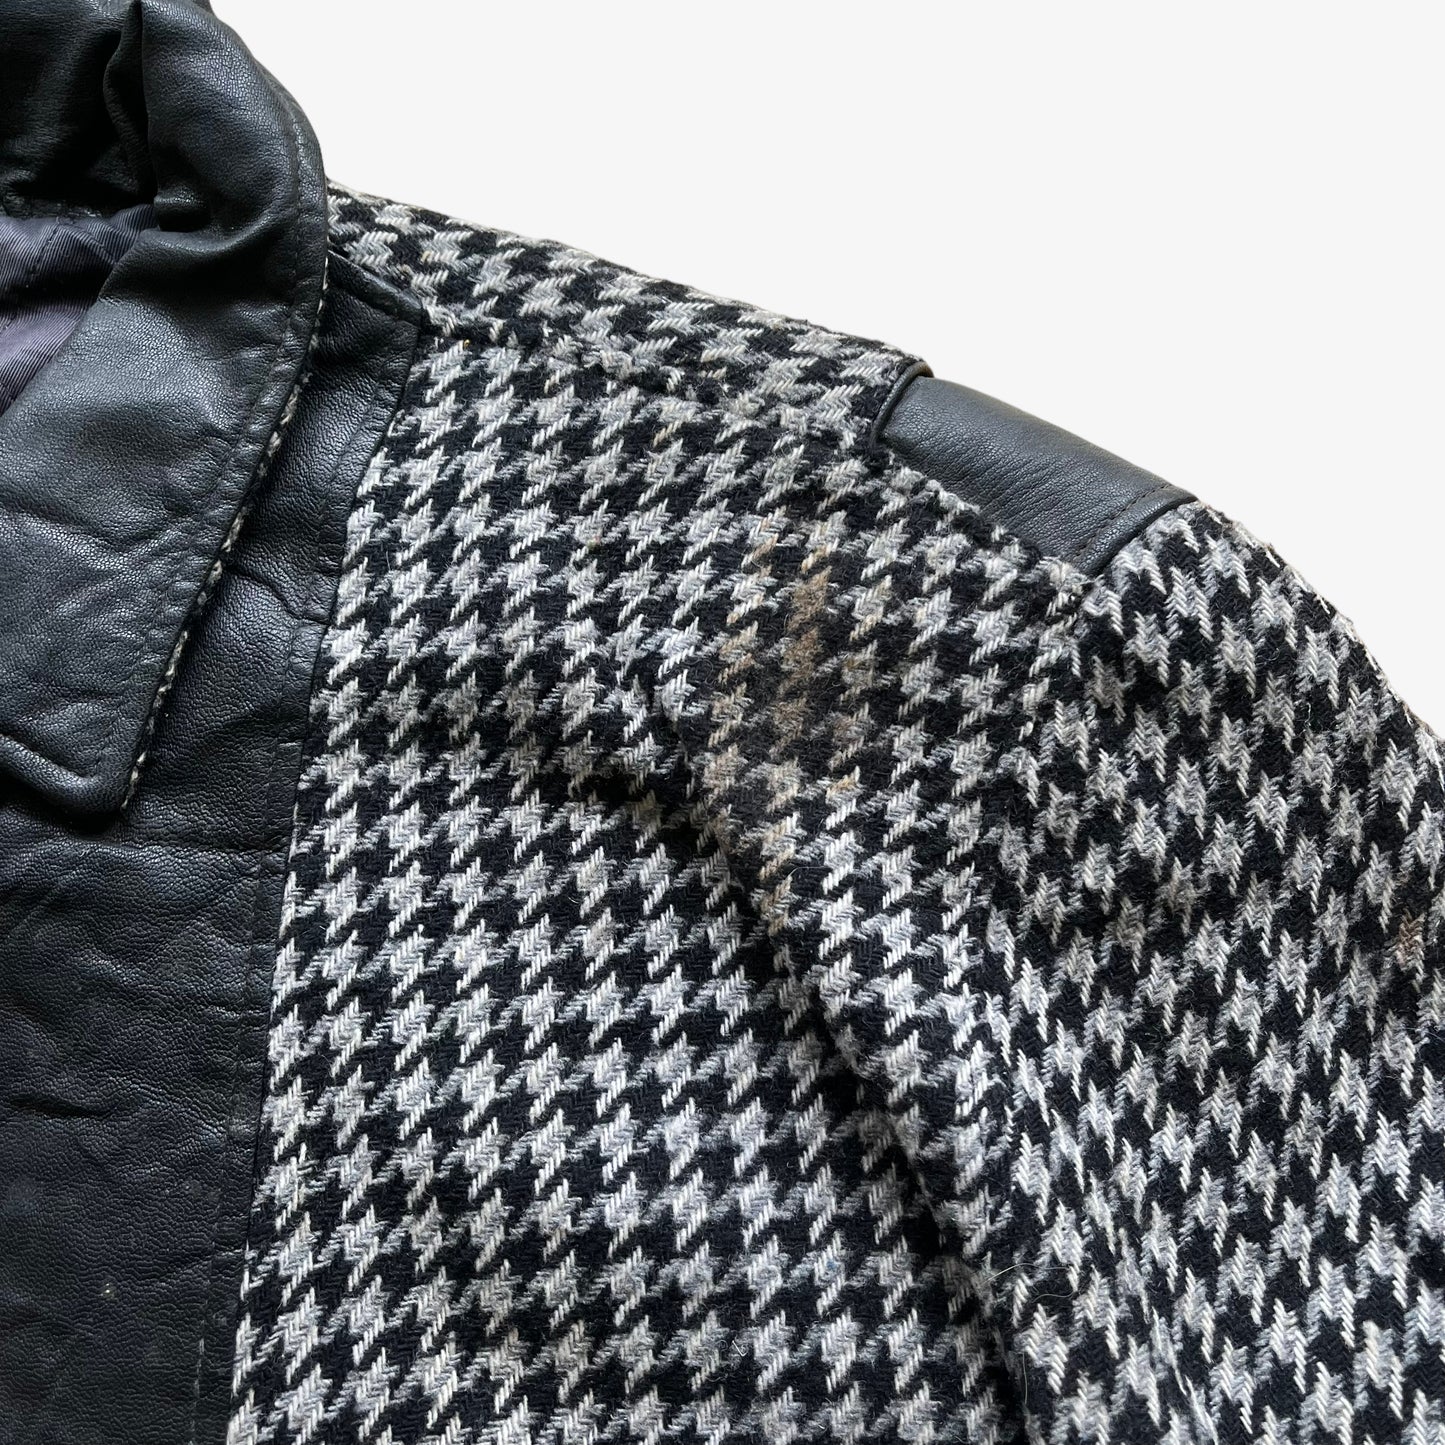 Bellucci Black & White Dogtooth Leather Blend Biker Jacket Mark - Casspios Dream